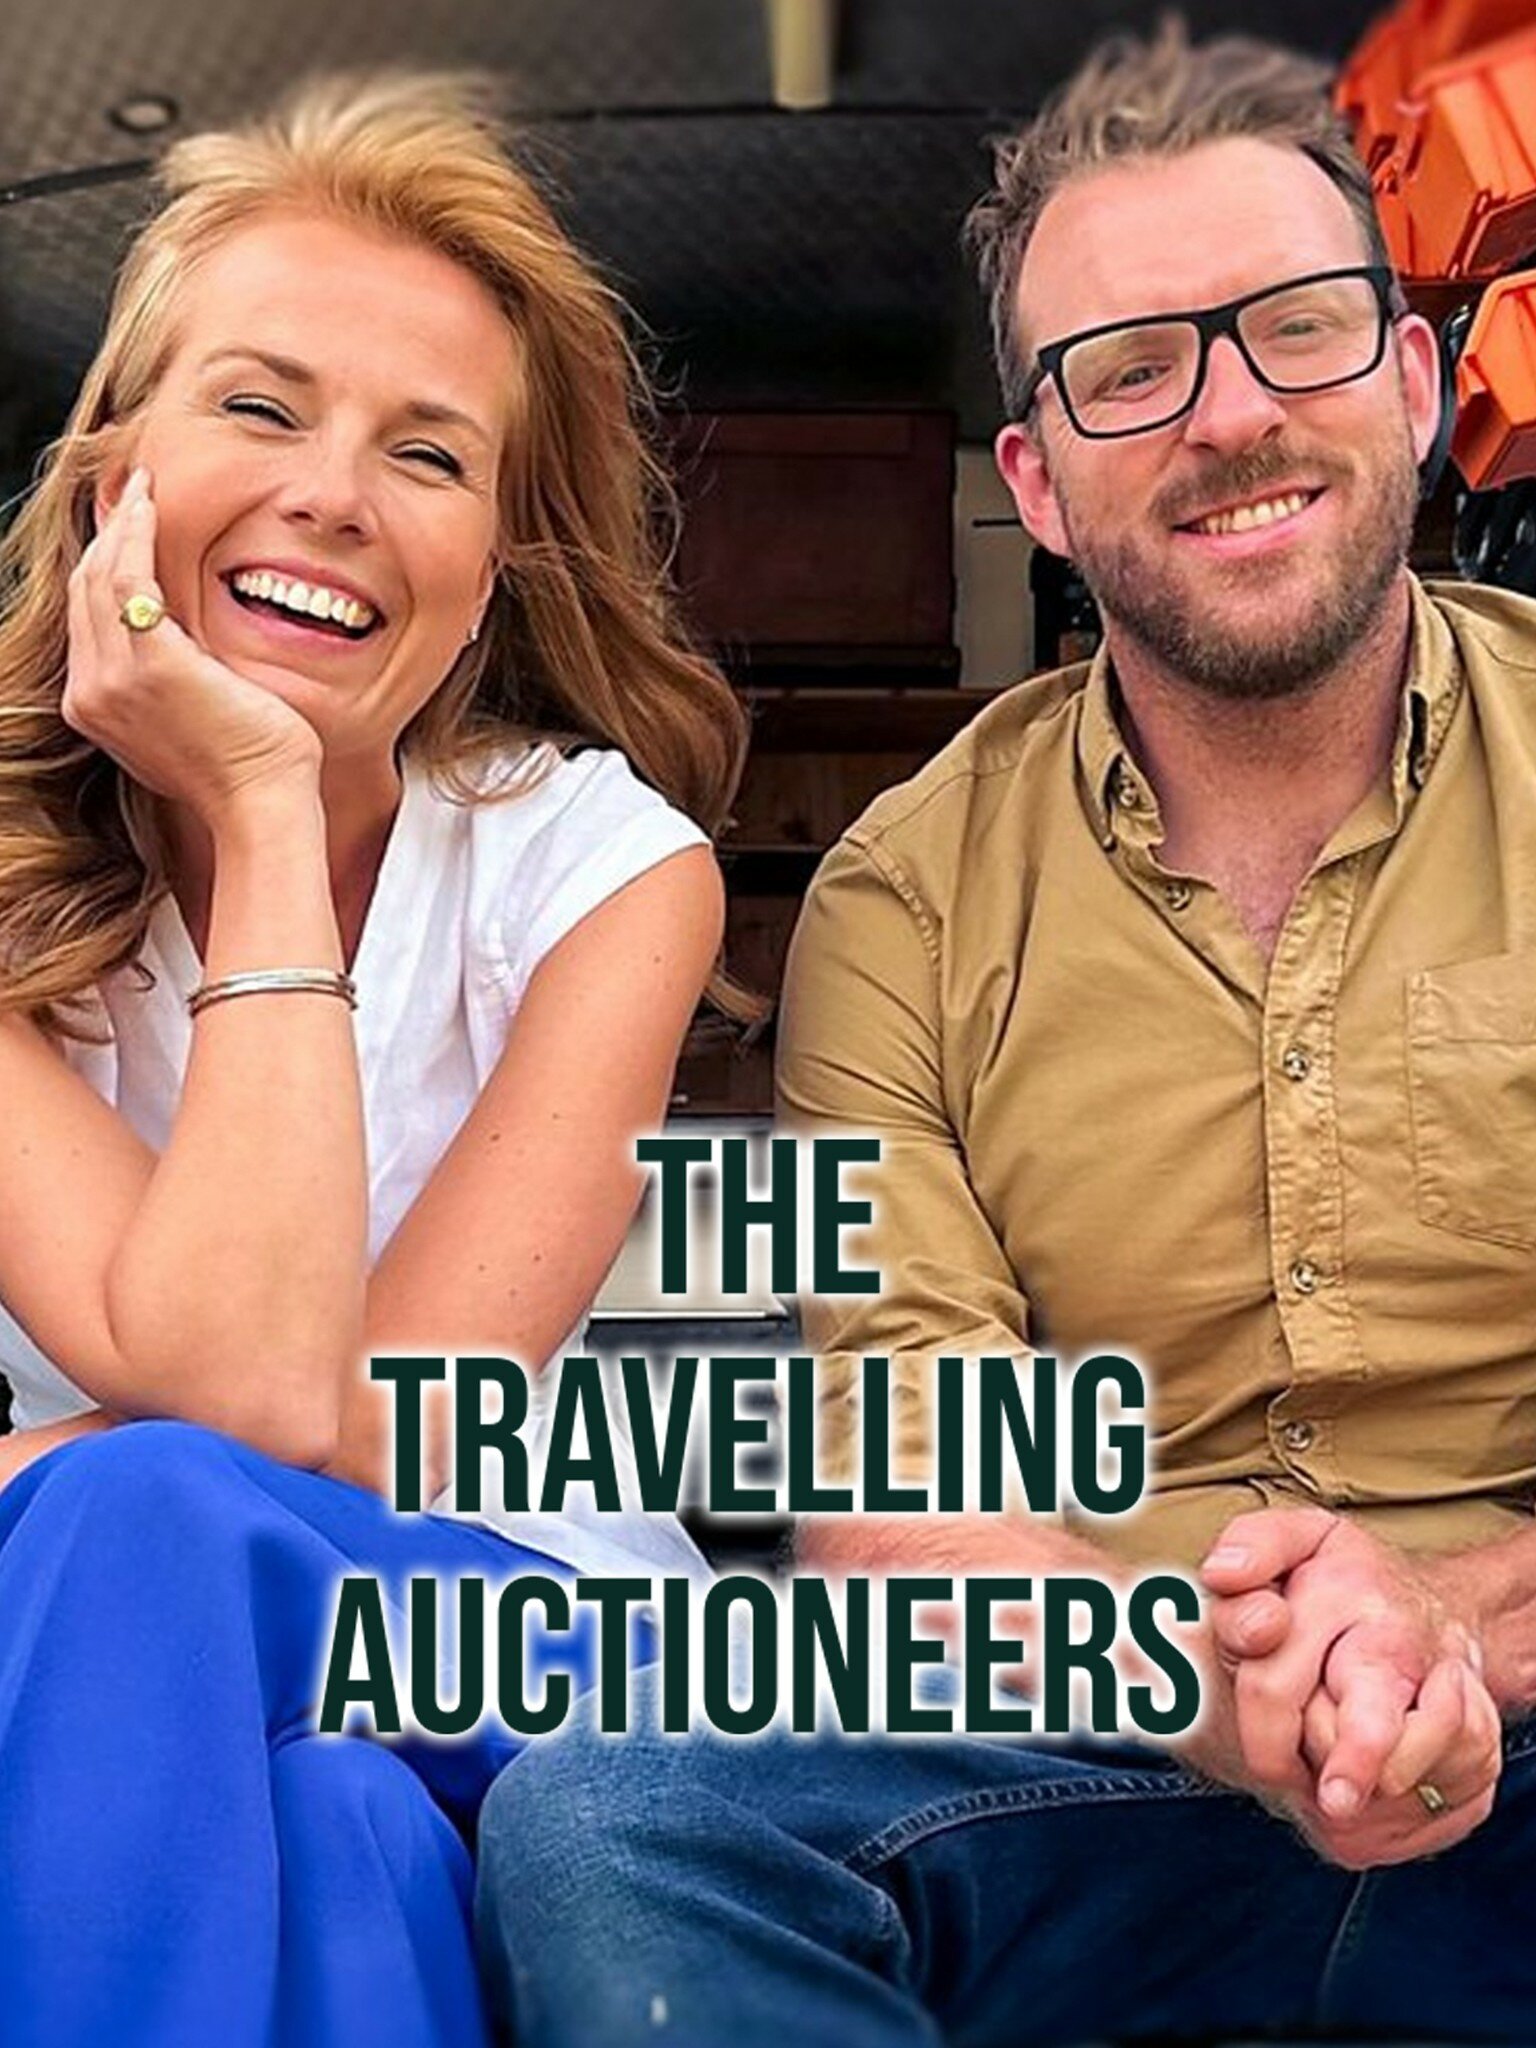 The Travelling Auctioneers ne zaman